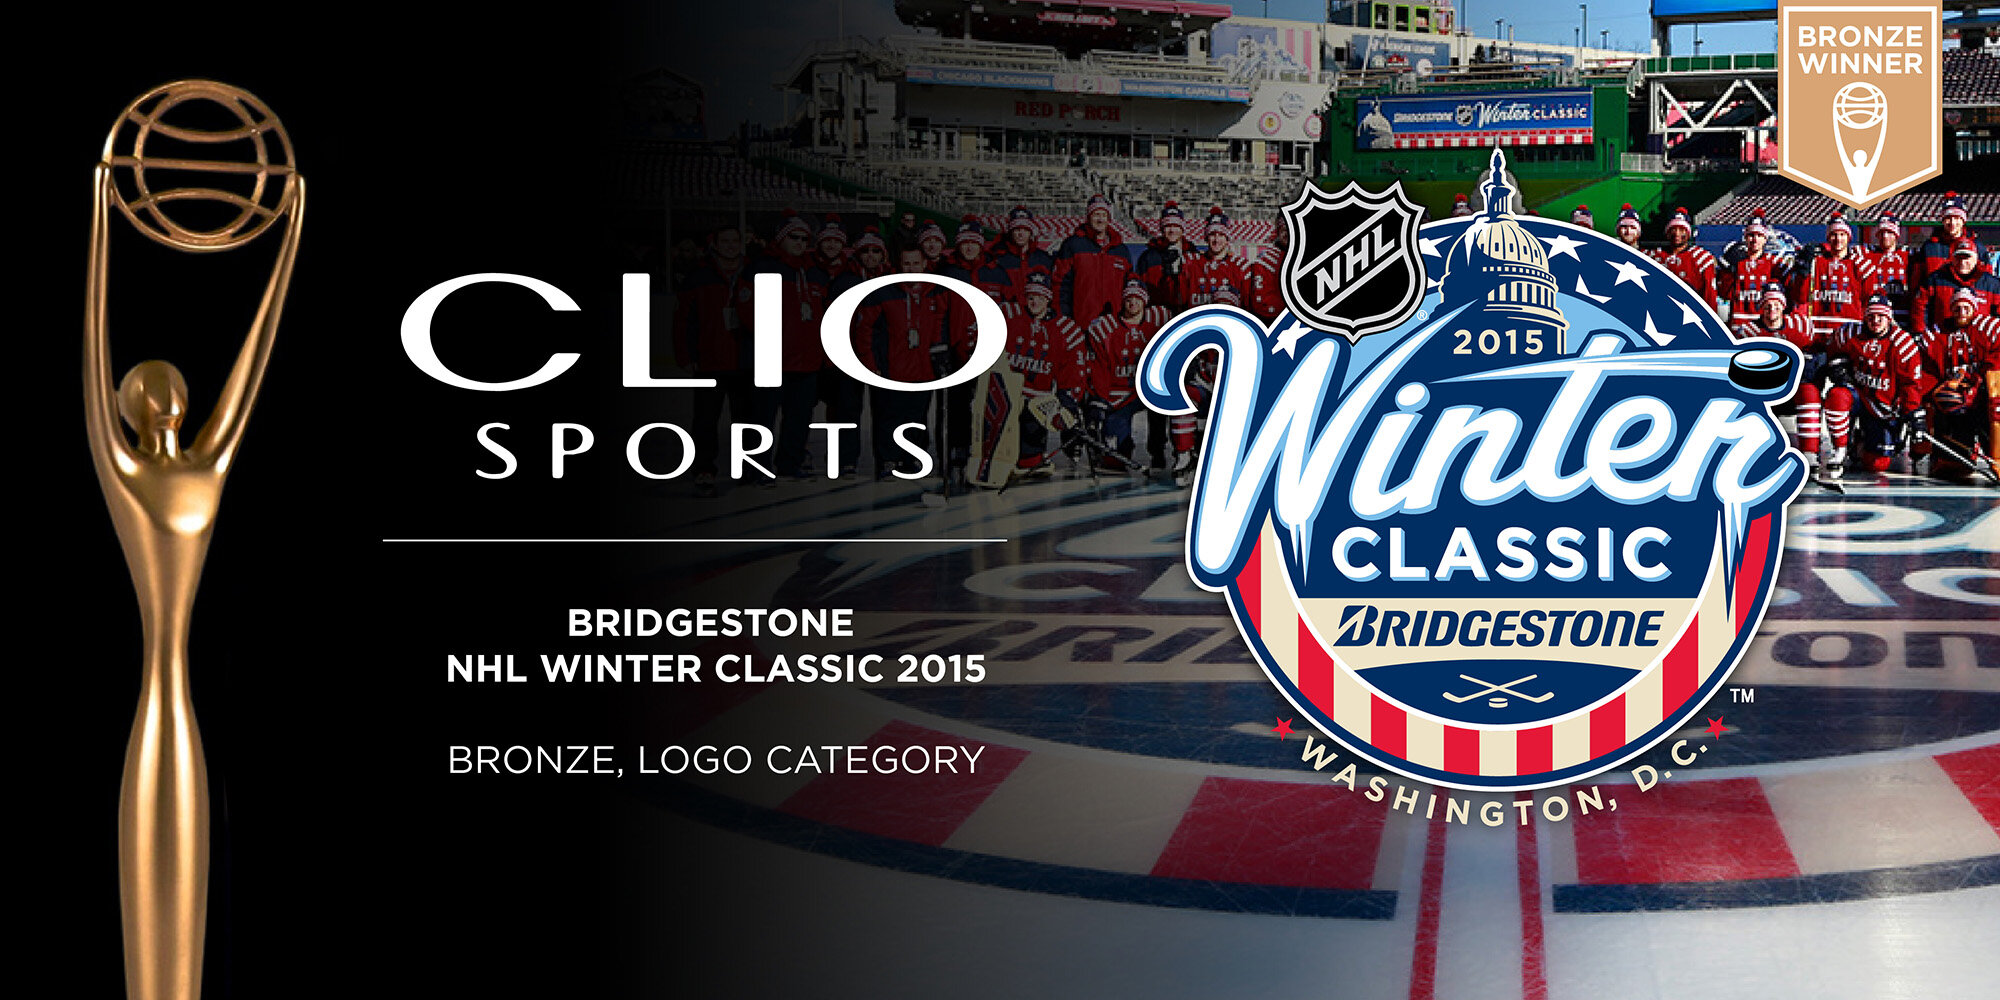 NHL 2015 WINTER CLASSIC IDENTITY TAKES BRONZE AT CLIO SPORTS